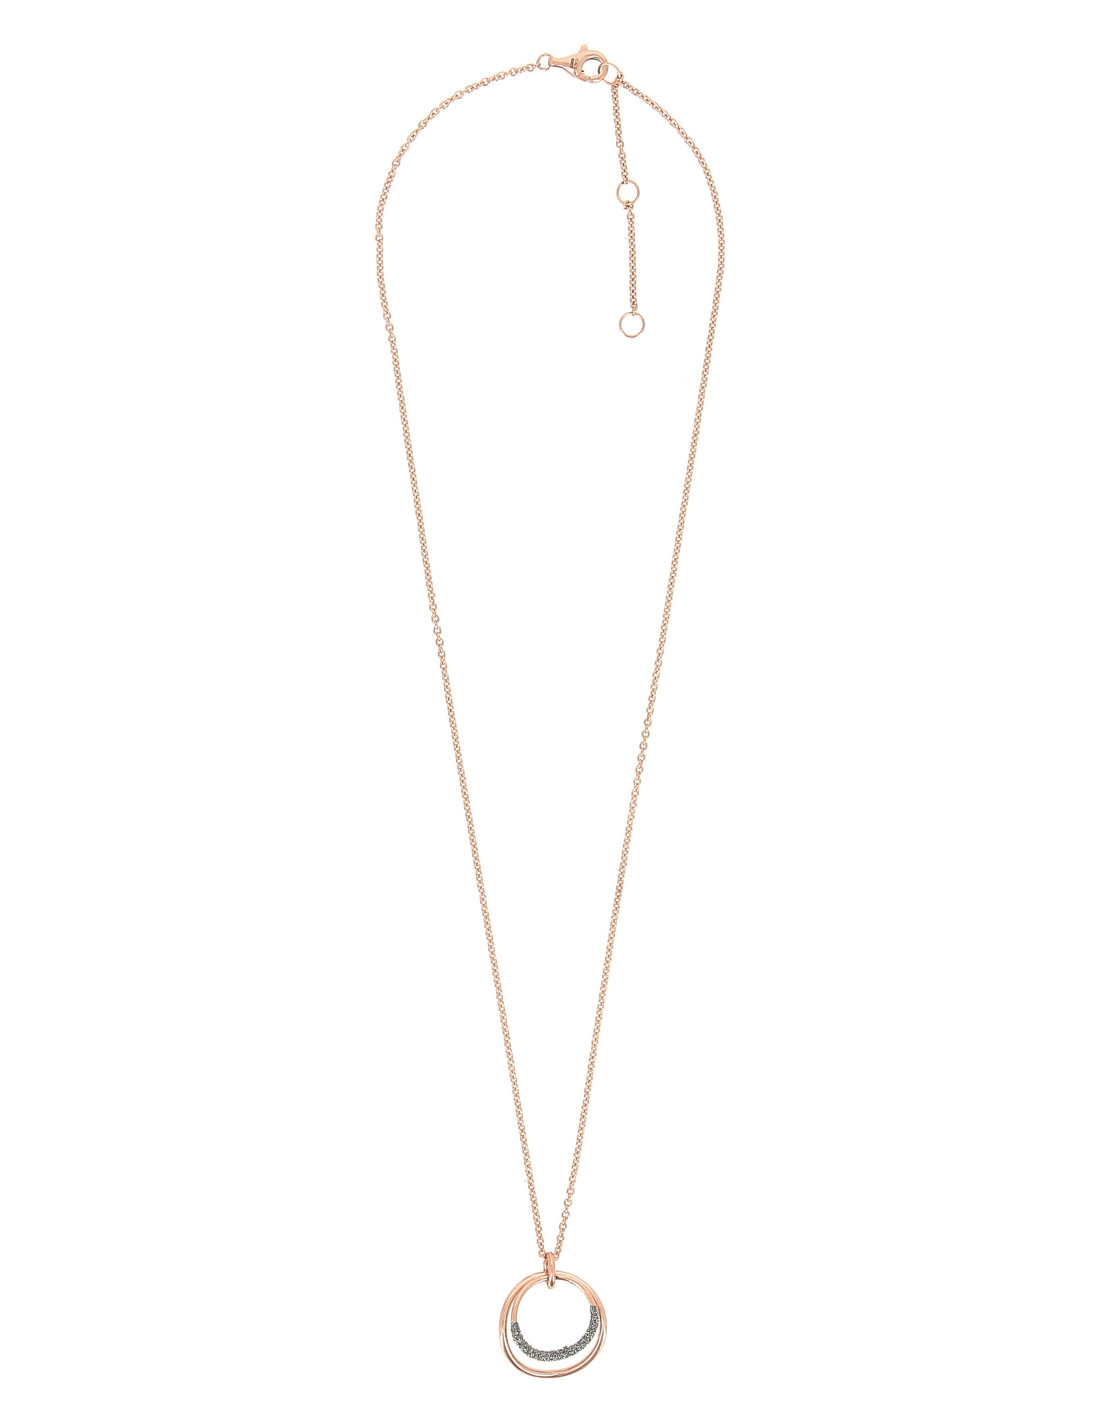 Pesavento BASIC GOLD 18kt gold necklace with diamond powder Ref: YBSCE013